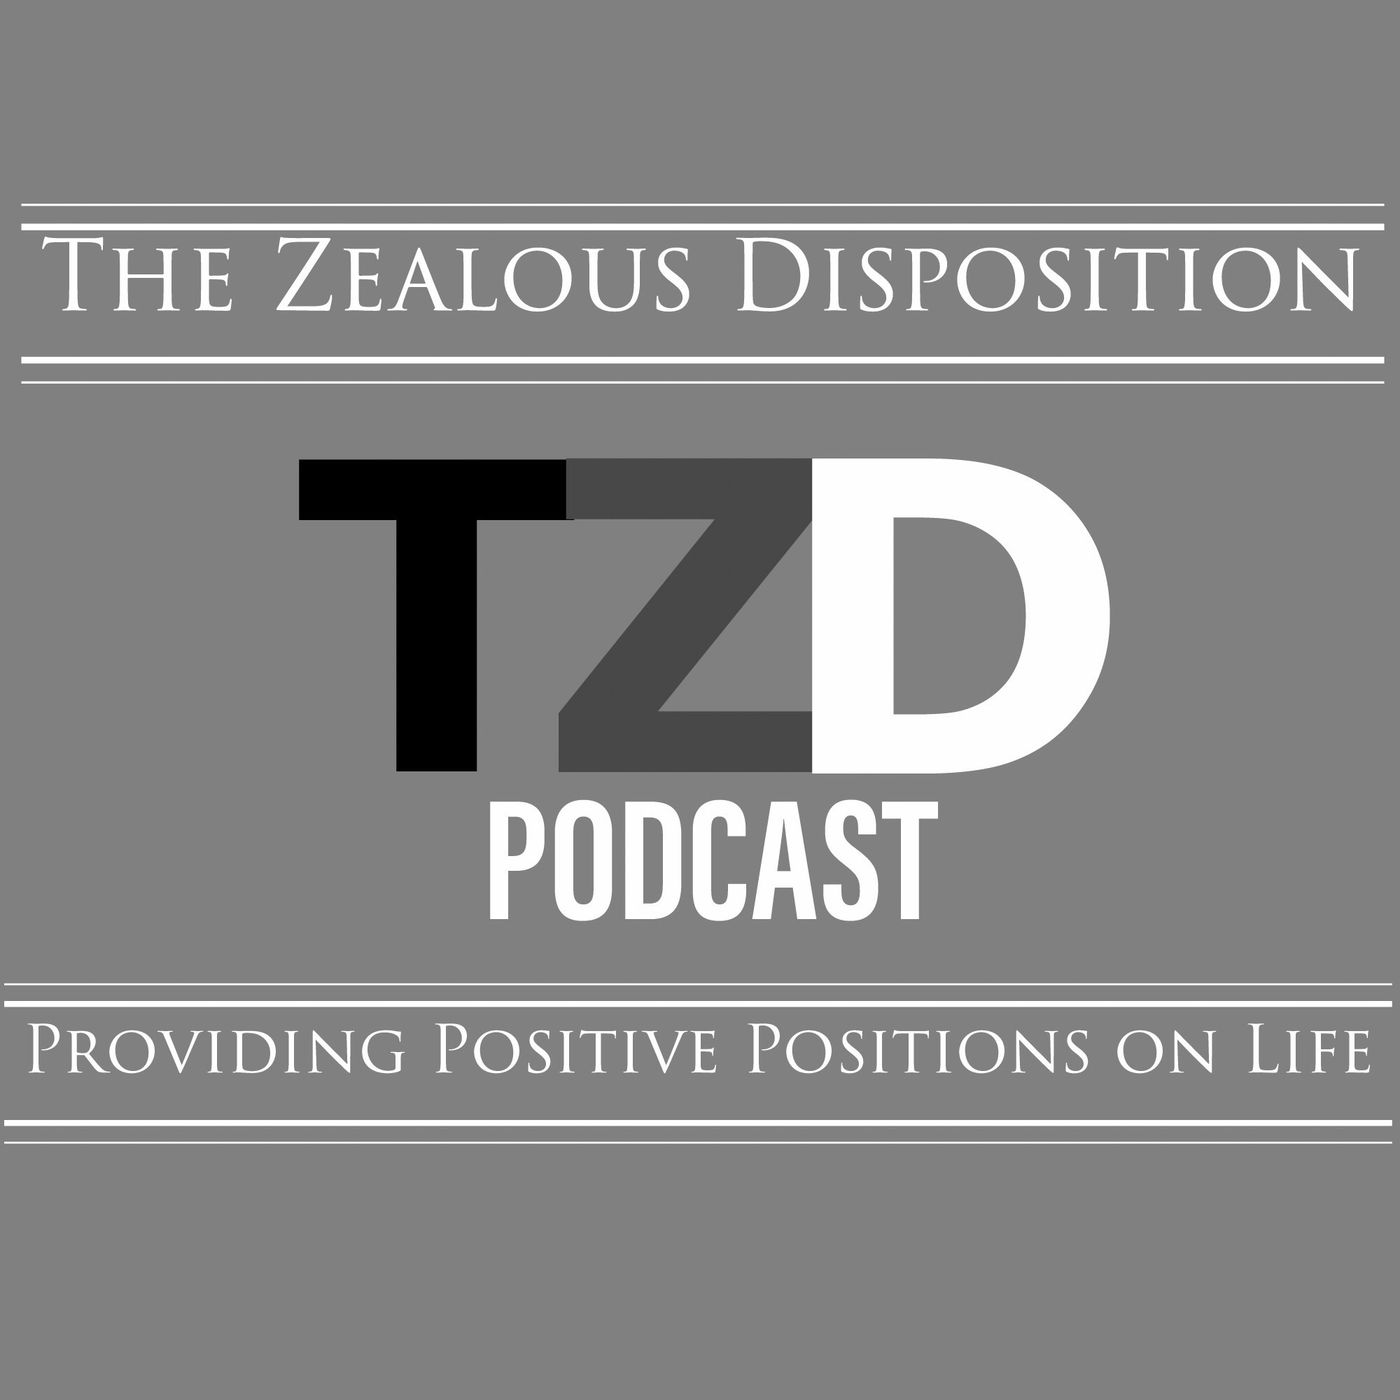 The Zealous Disposition Podcast